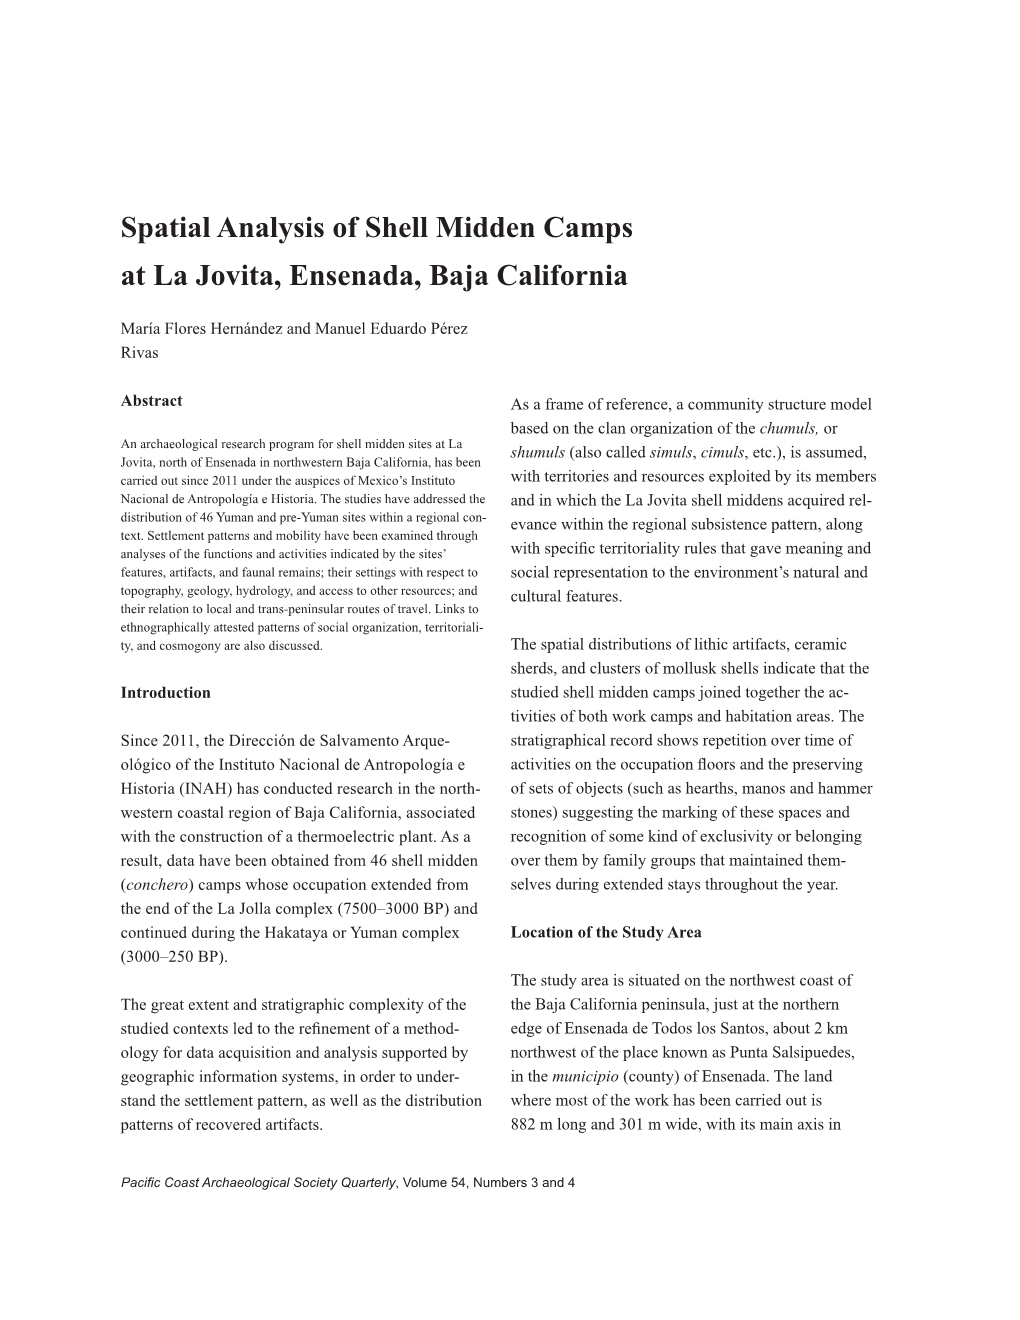 Spatial Analysis of Shell Midden Camps at La Jovita, Ensenada, Baja California